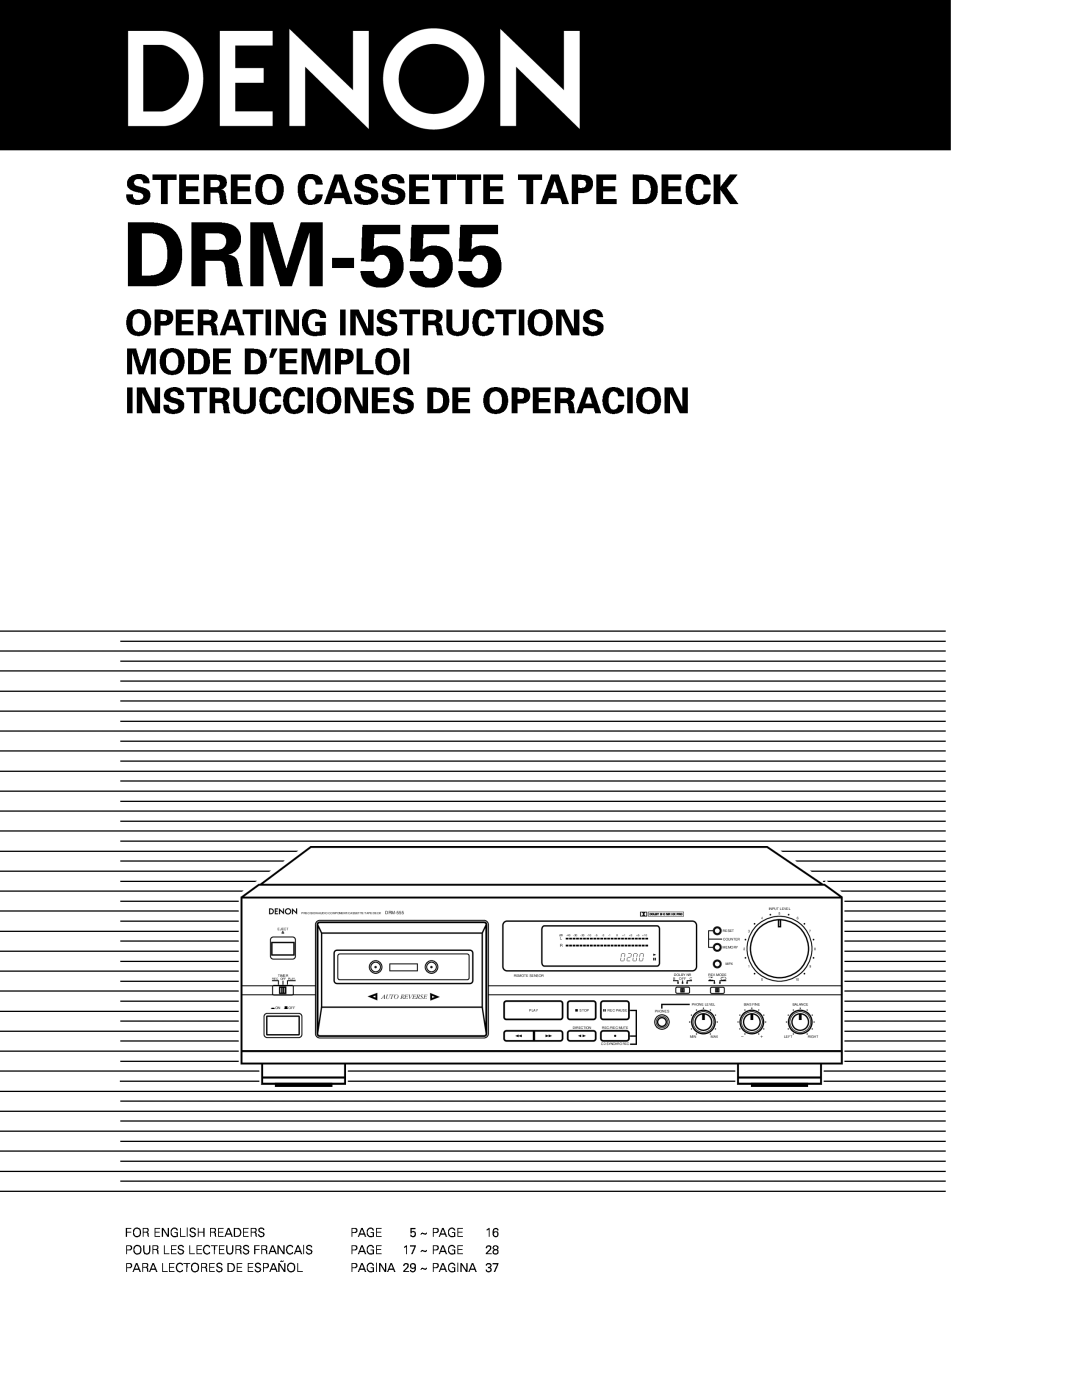 Denon DRM-555 manual Stereo Cassette Tape Deck, Operating Instructions Mode D’Emploi, Instrucciones De Operacion 